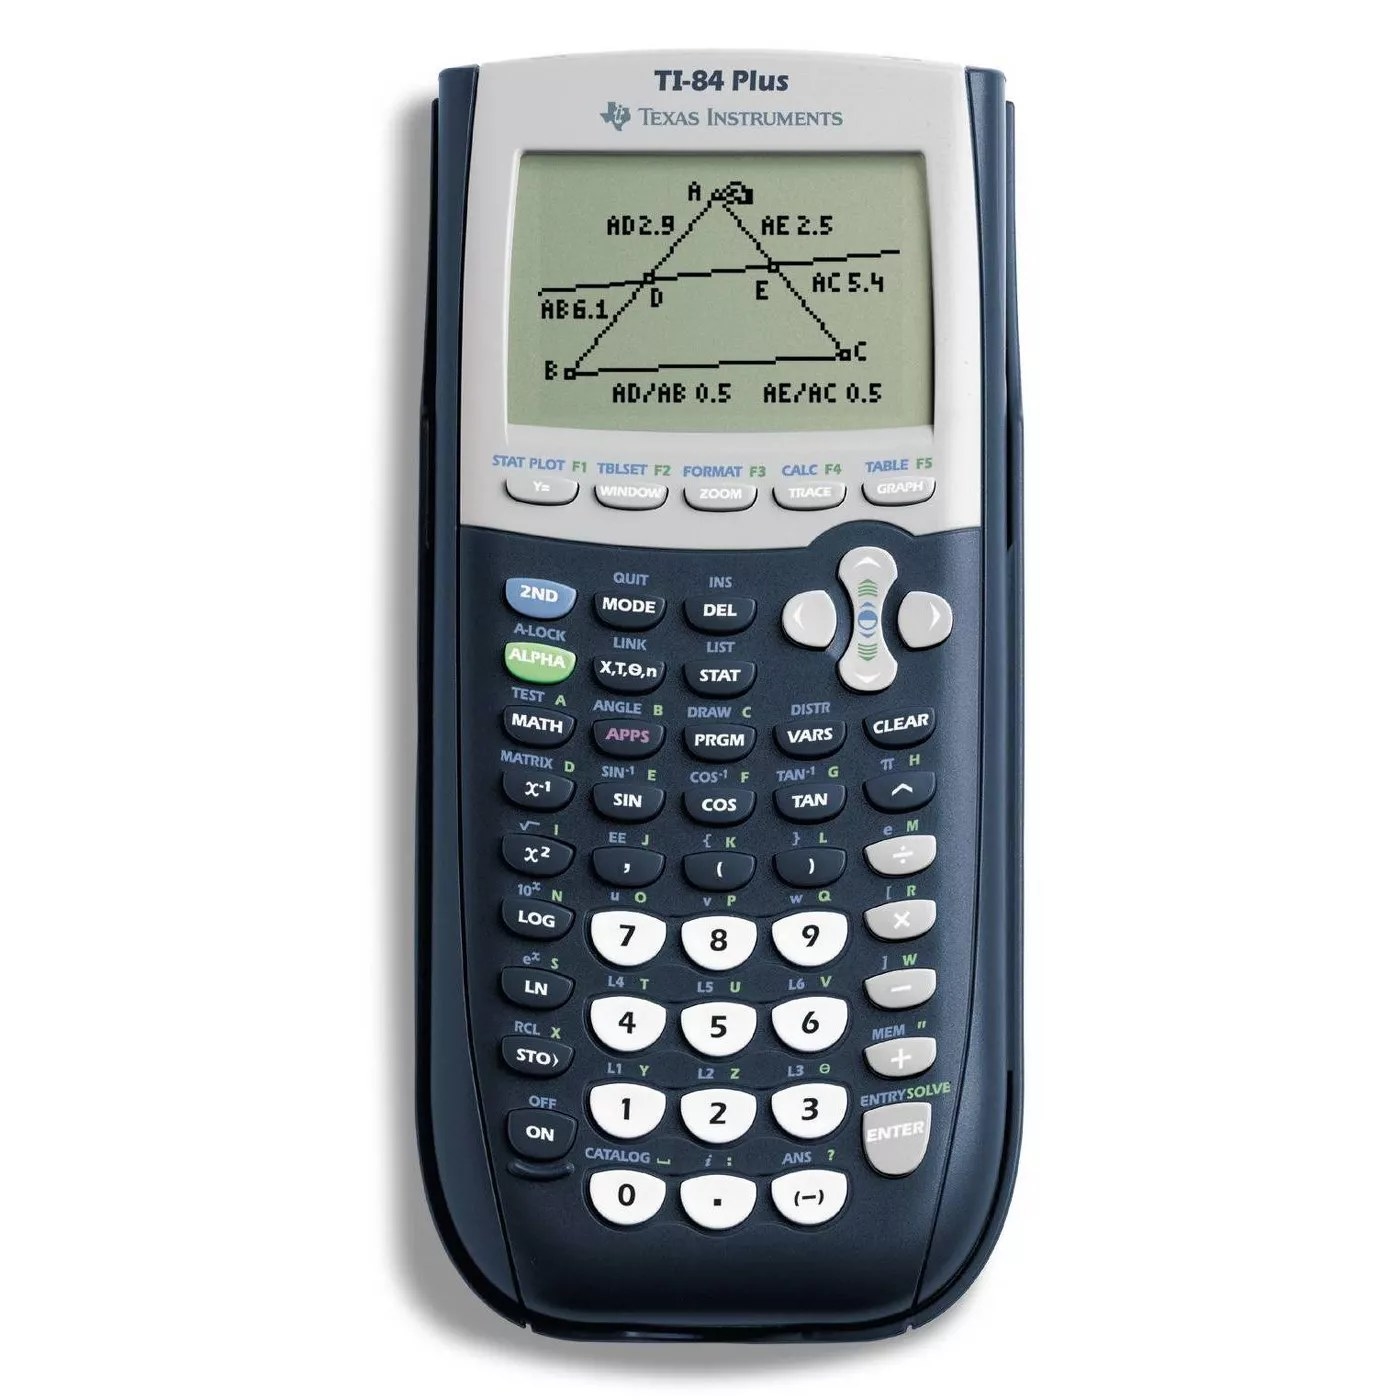 The TI-84 Plus calculator